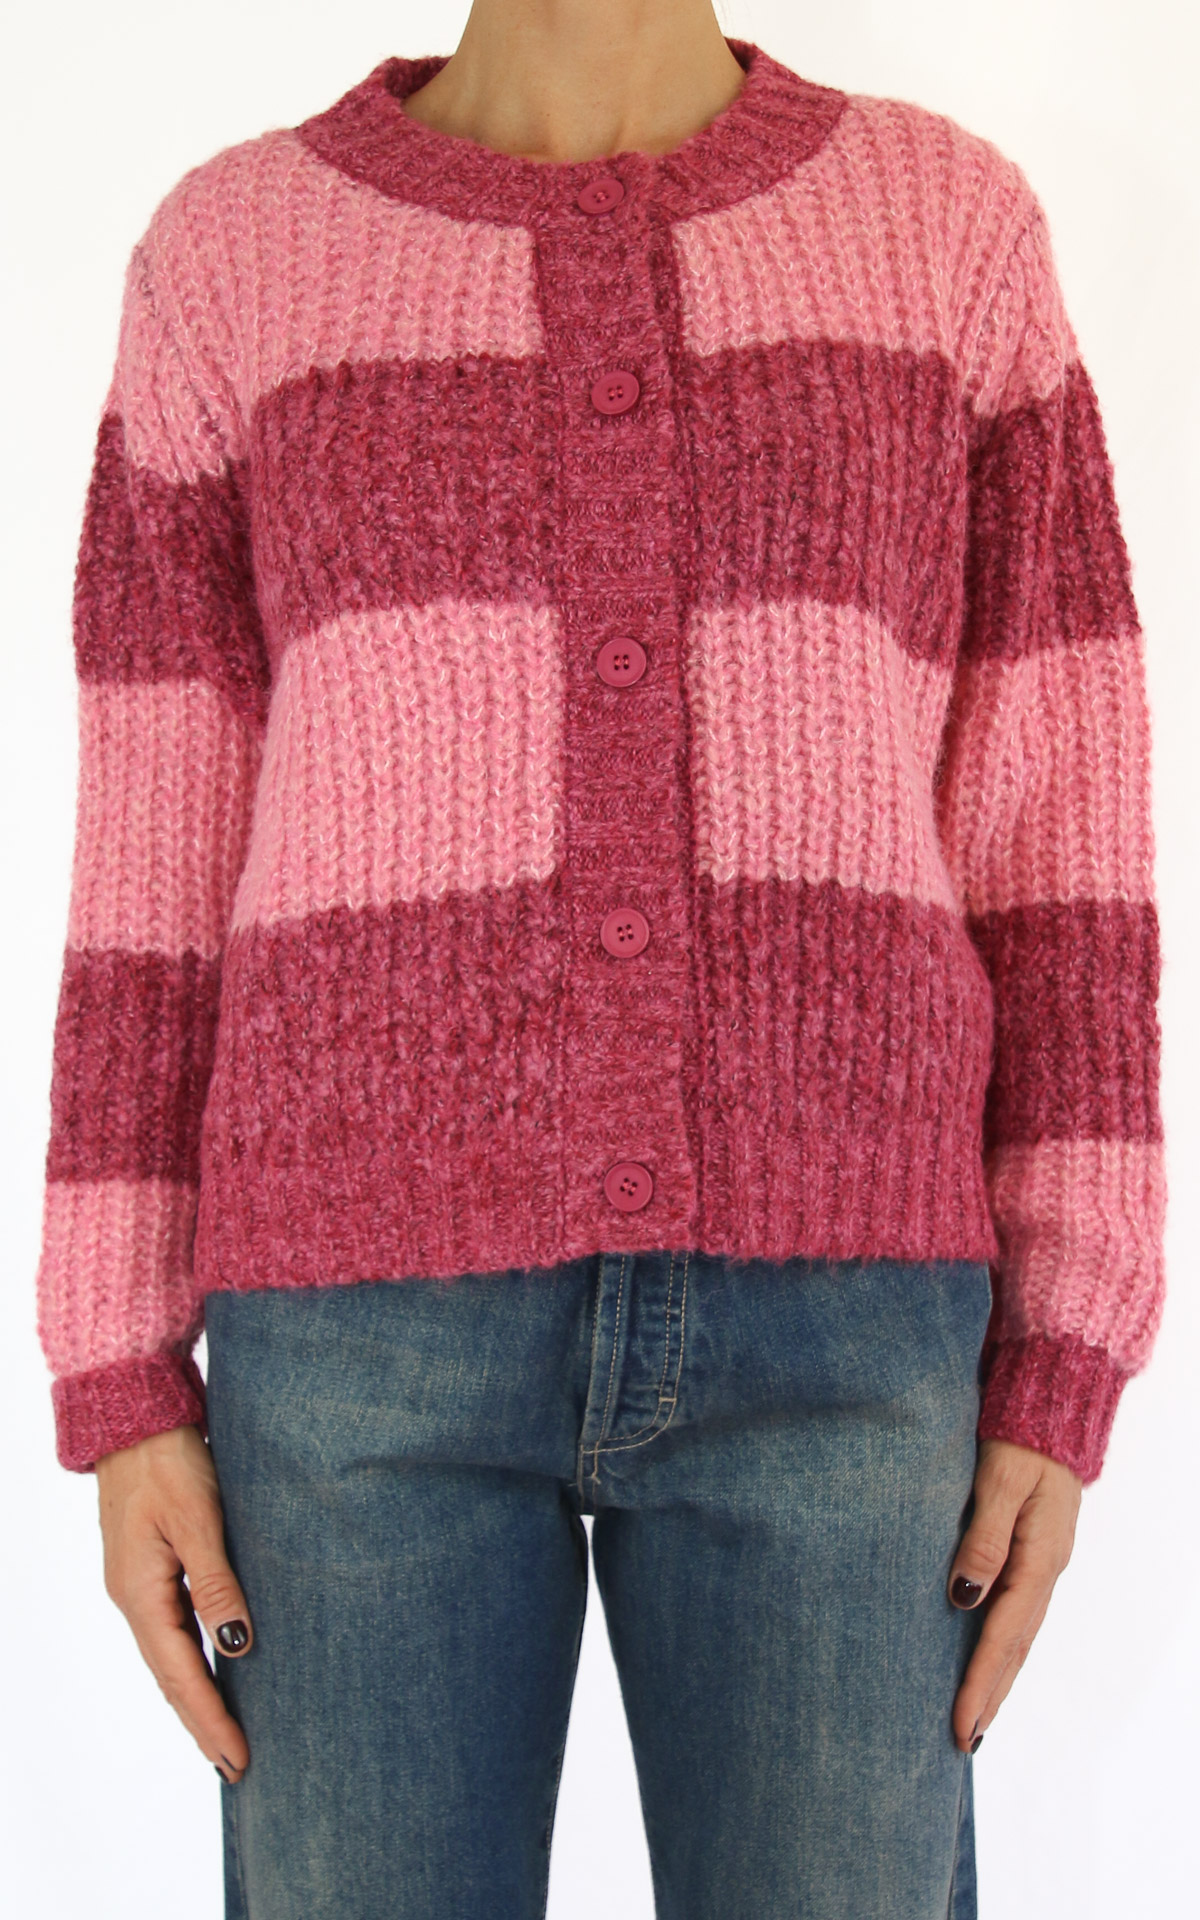 Compania Fantastica - cardigan bicolore - rosa/fragola